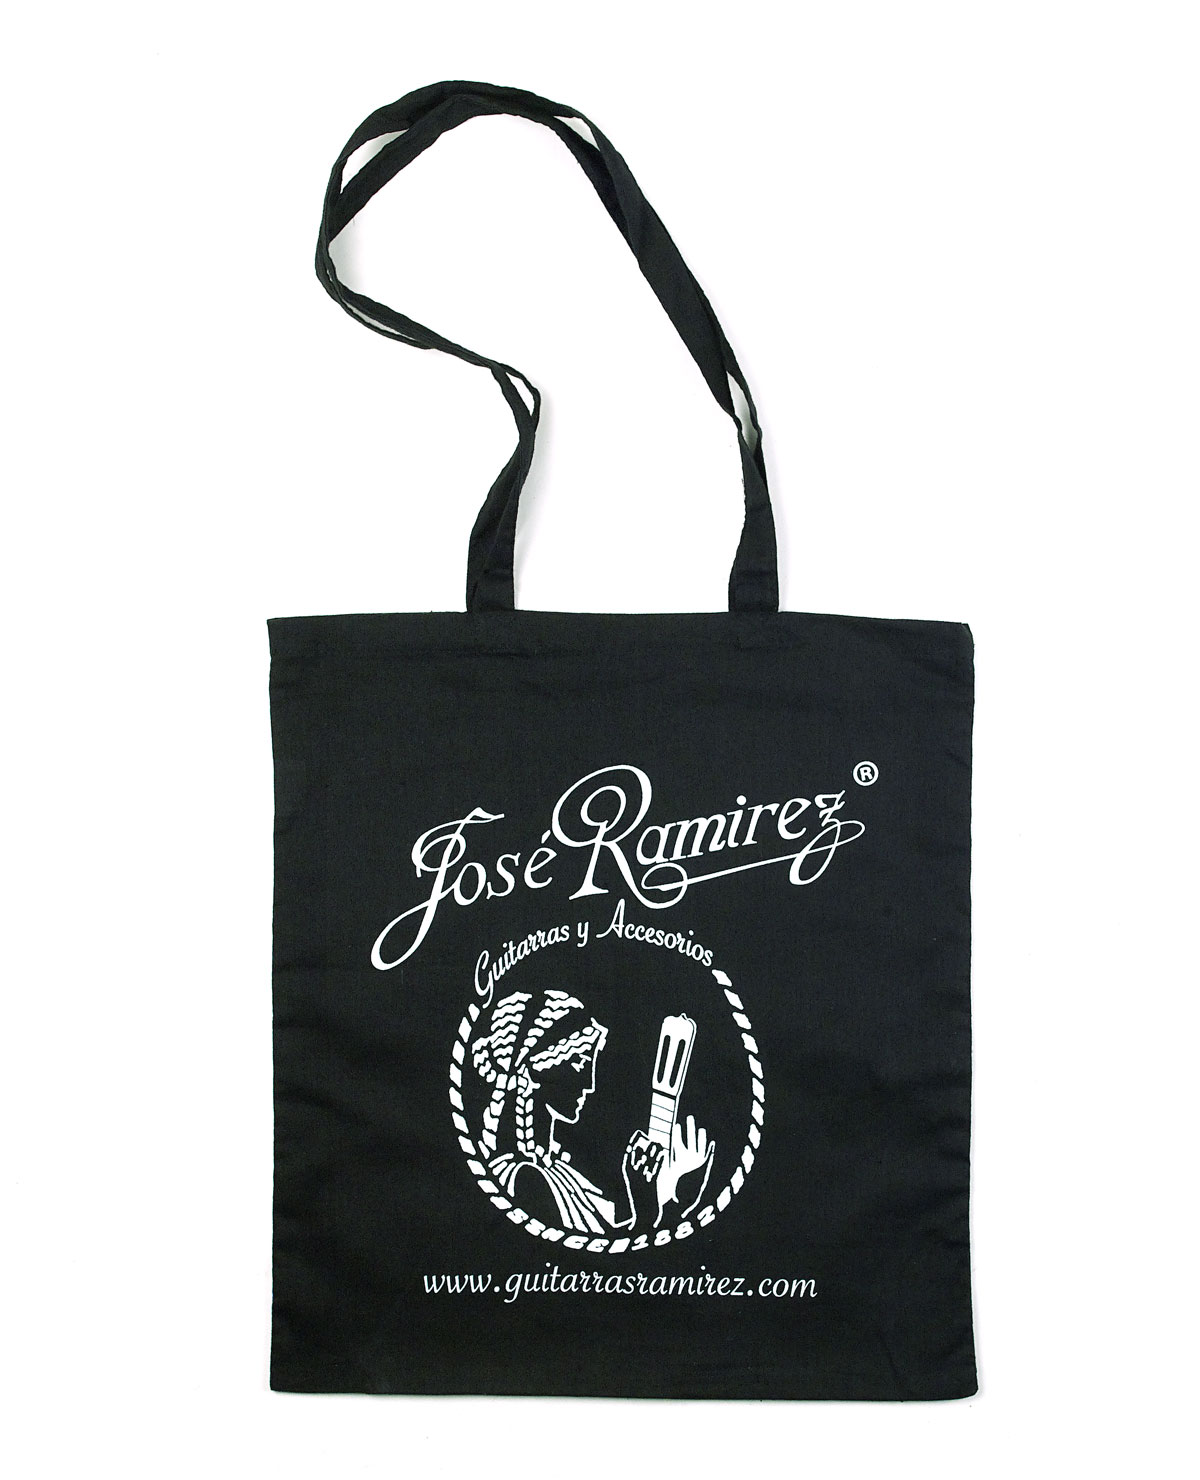 Black bag with design by José Ramírez II